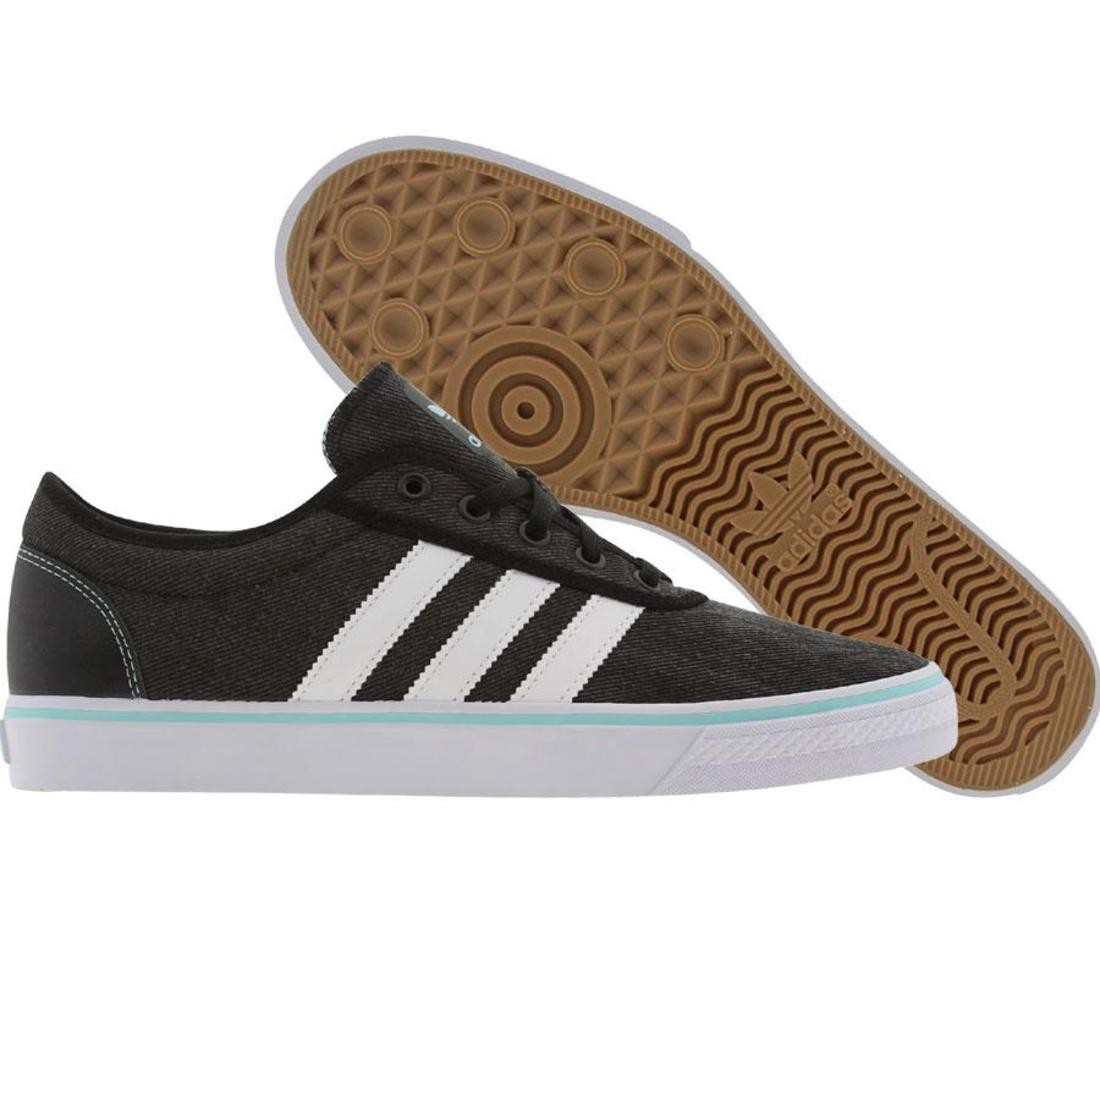 Adidas Adi Ease (black / runninwhite / ocean)